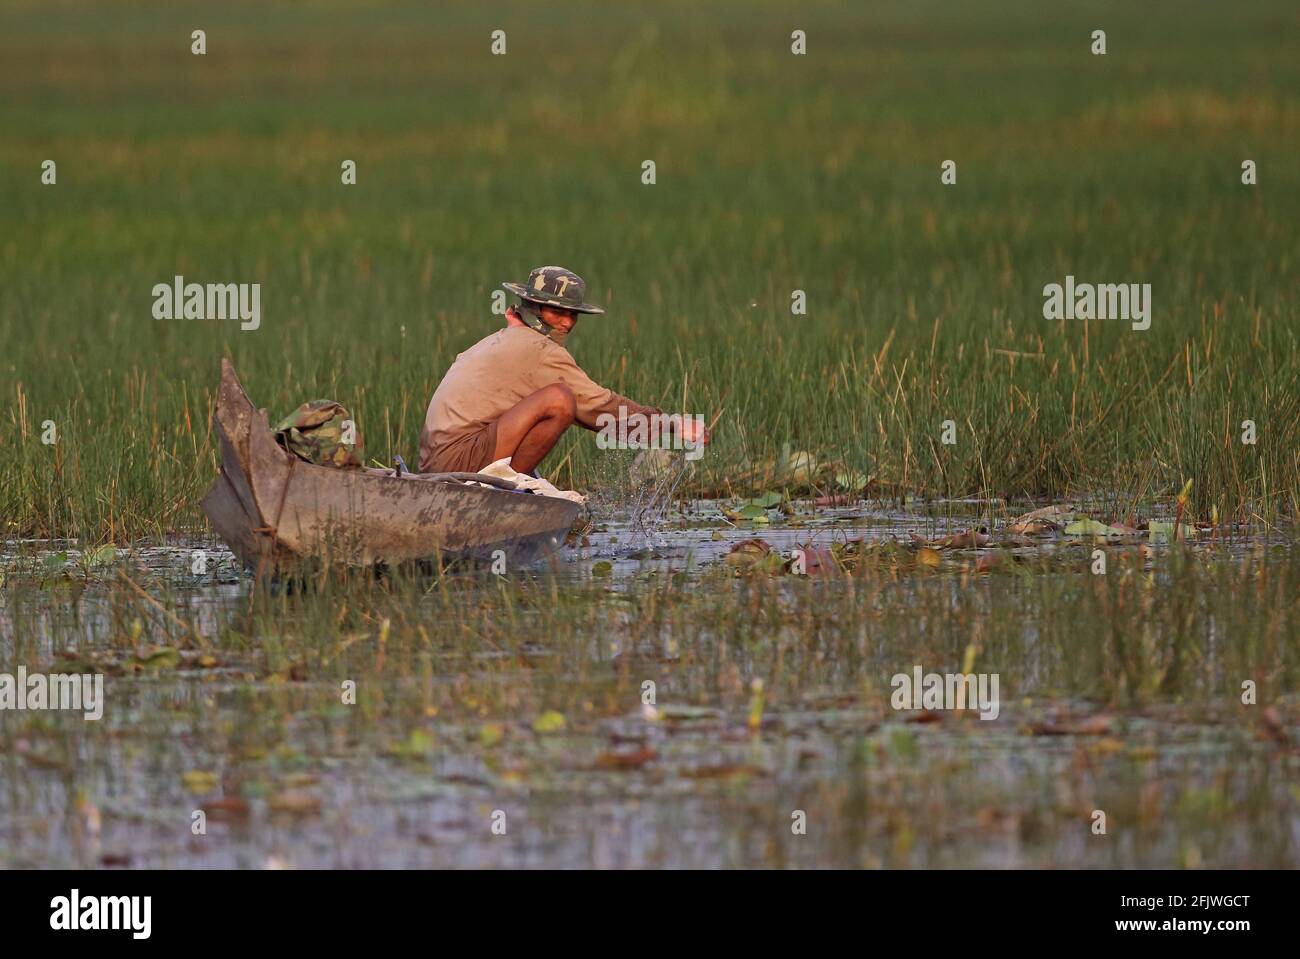 fisherman taking in net on boat in marsh Ang Trapaeng Thmor, Cambodia            January Stock Photo